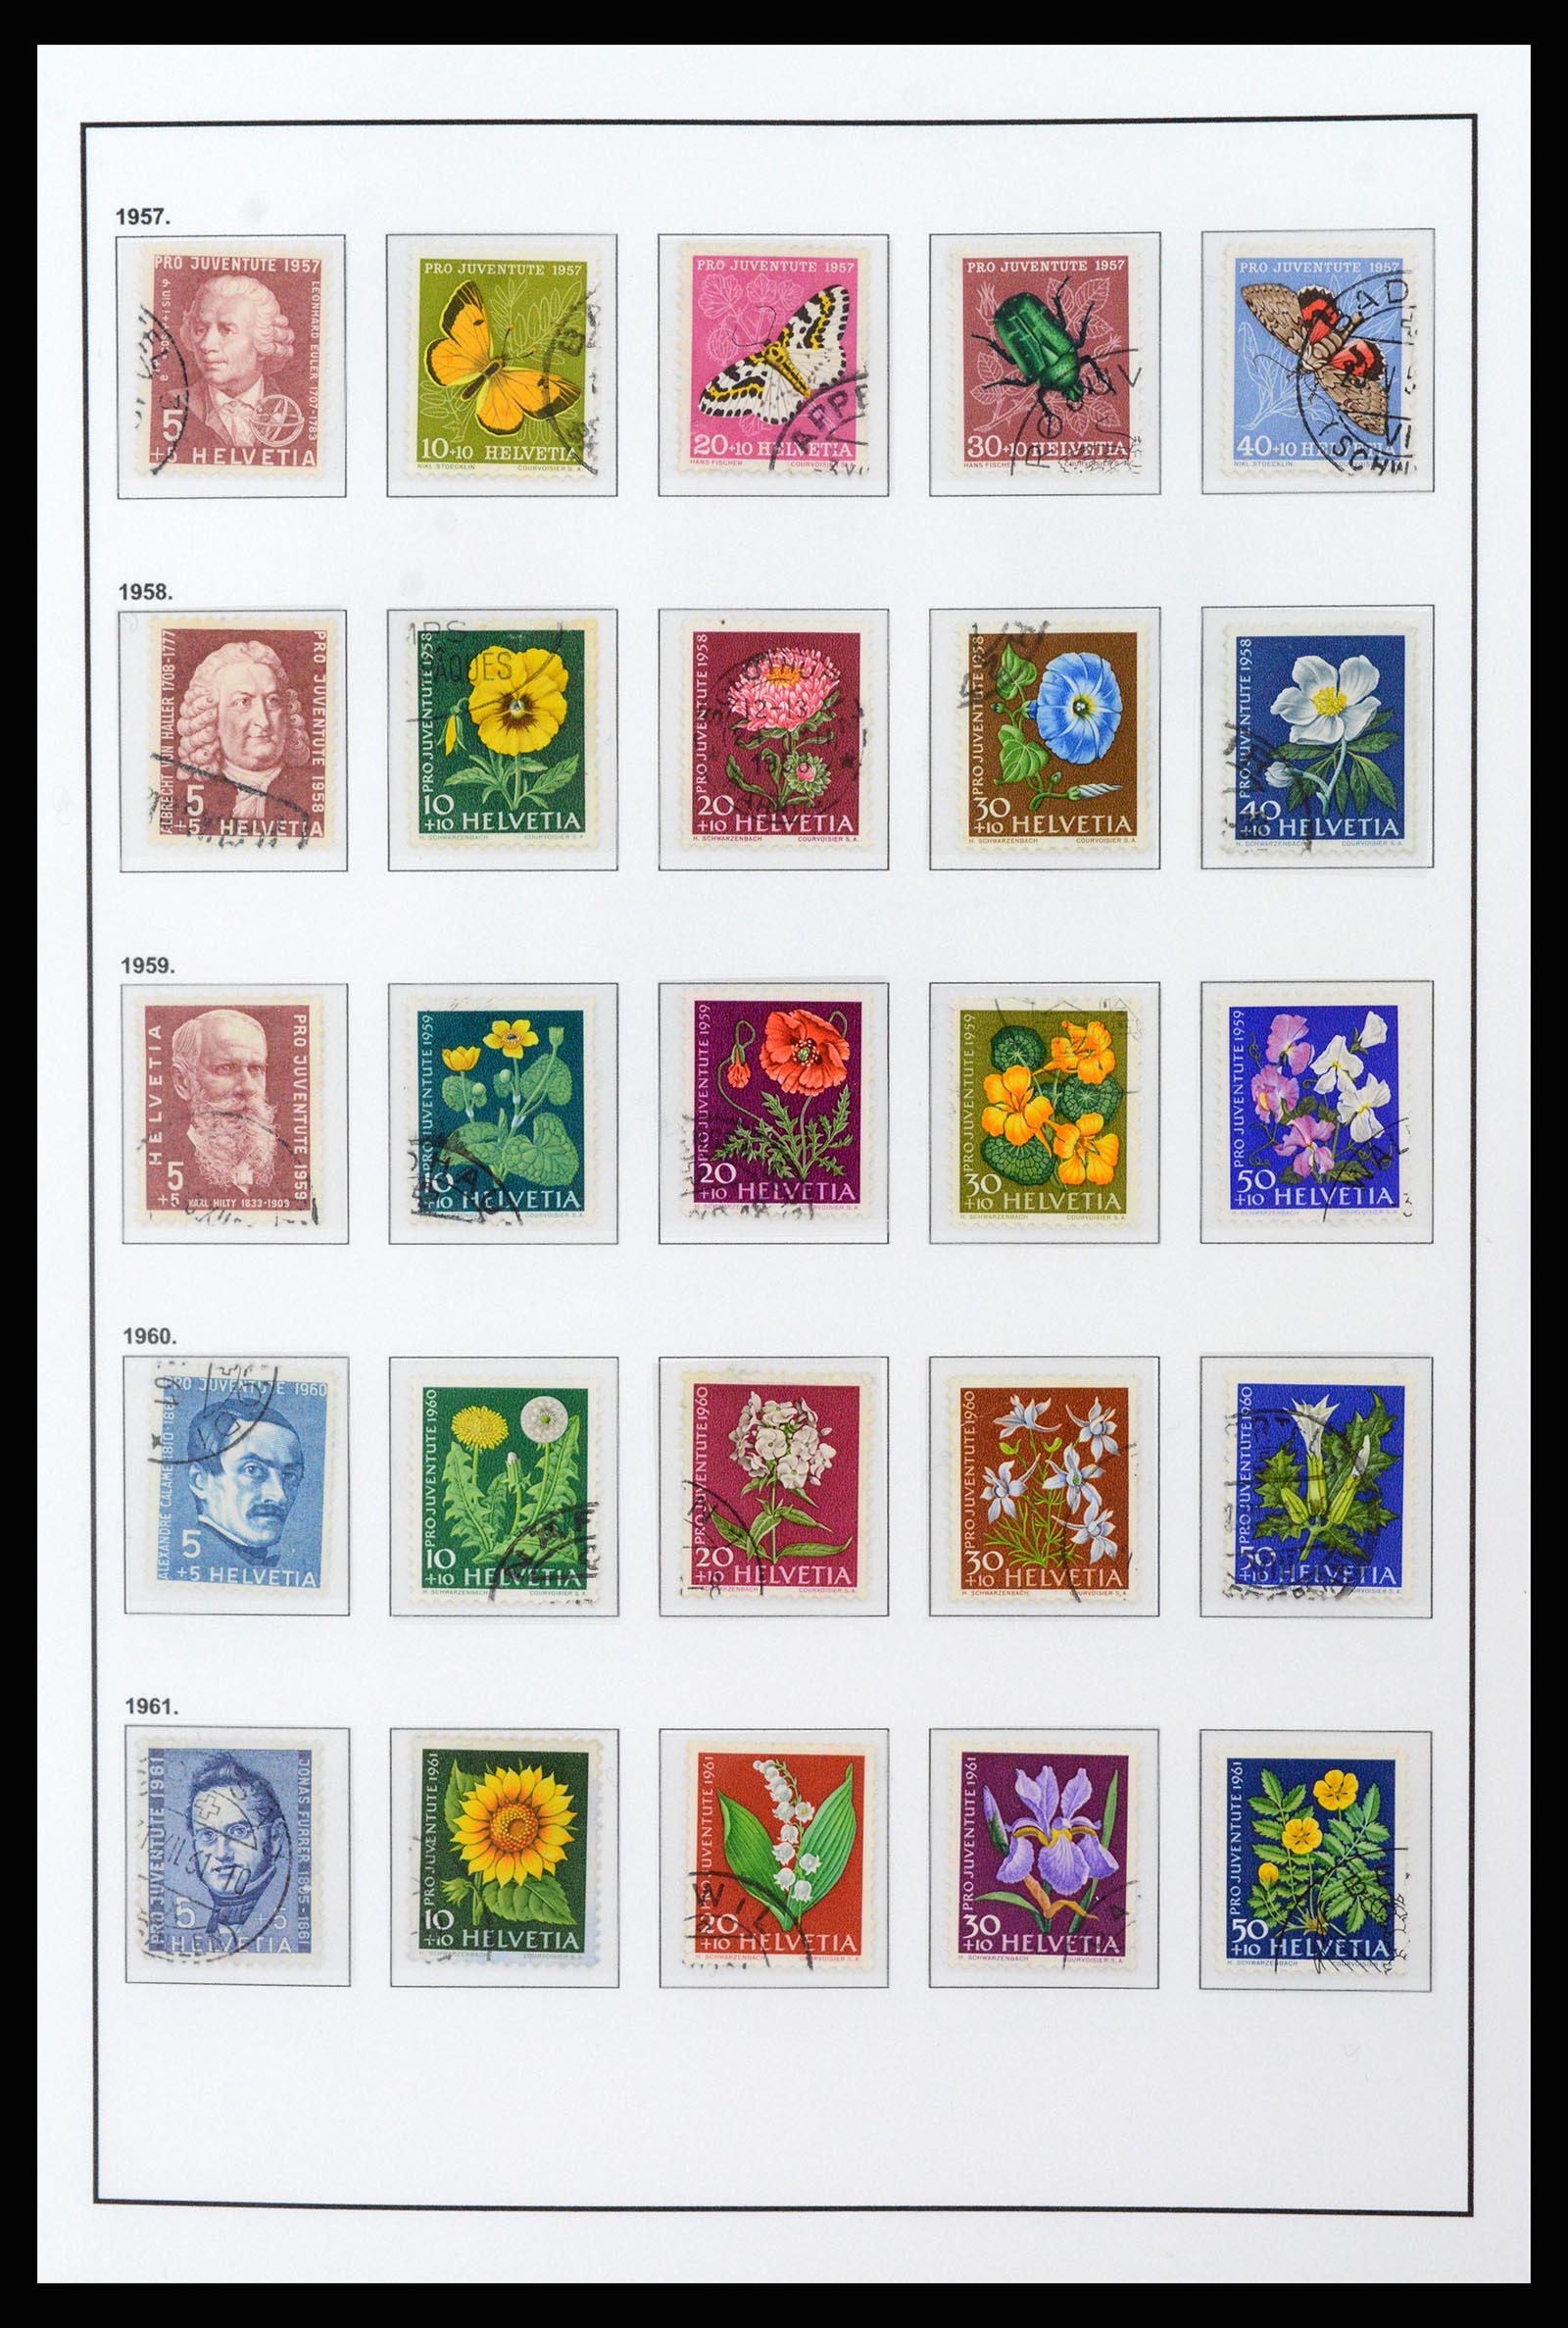 37225 064 - Stamp collection 37225 Switzerland 1854-2020.